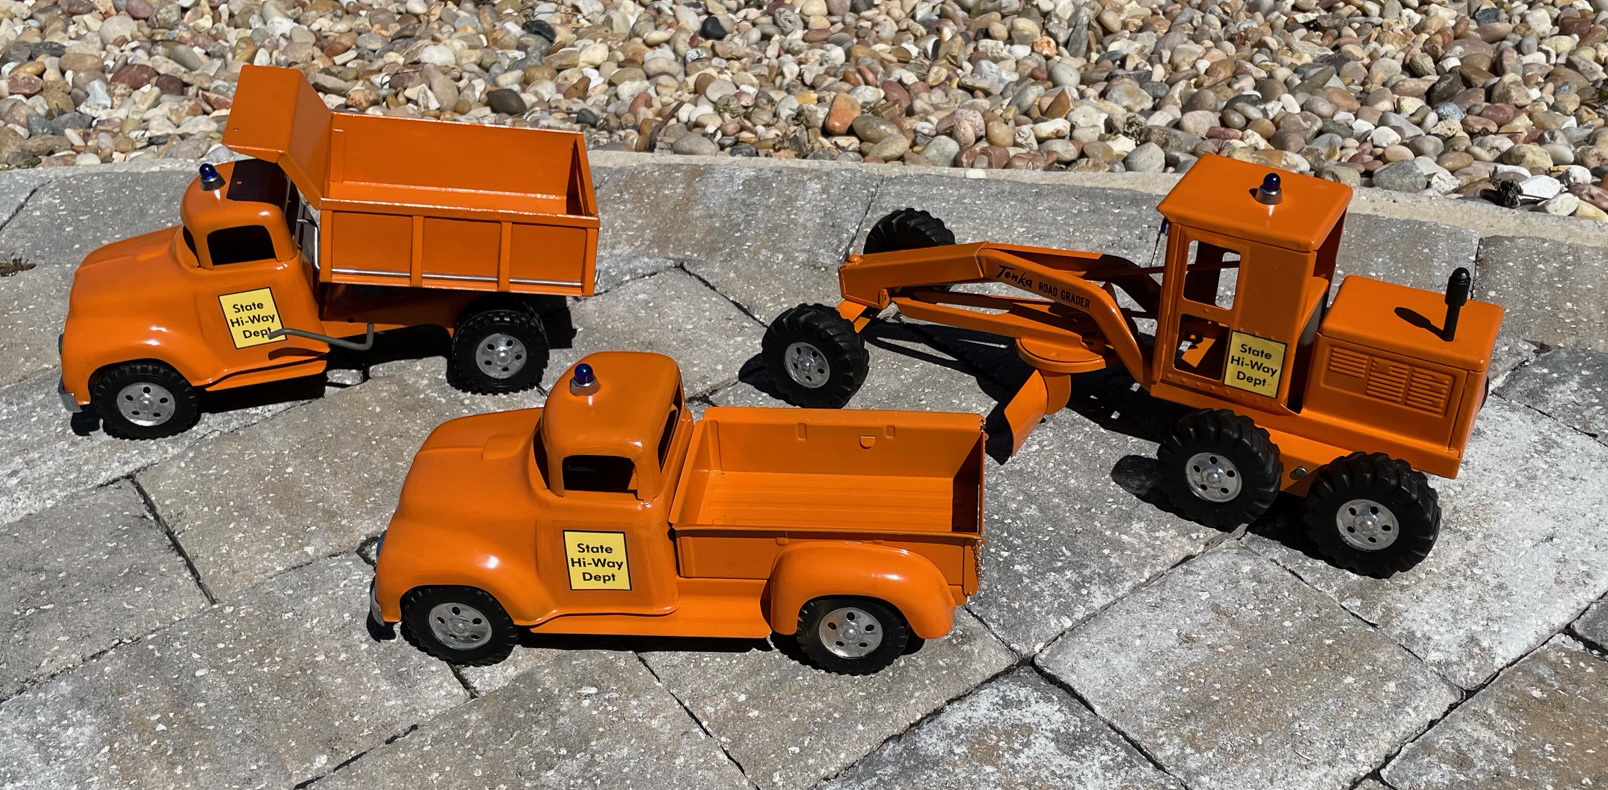 Restored toy trucks